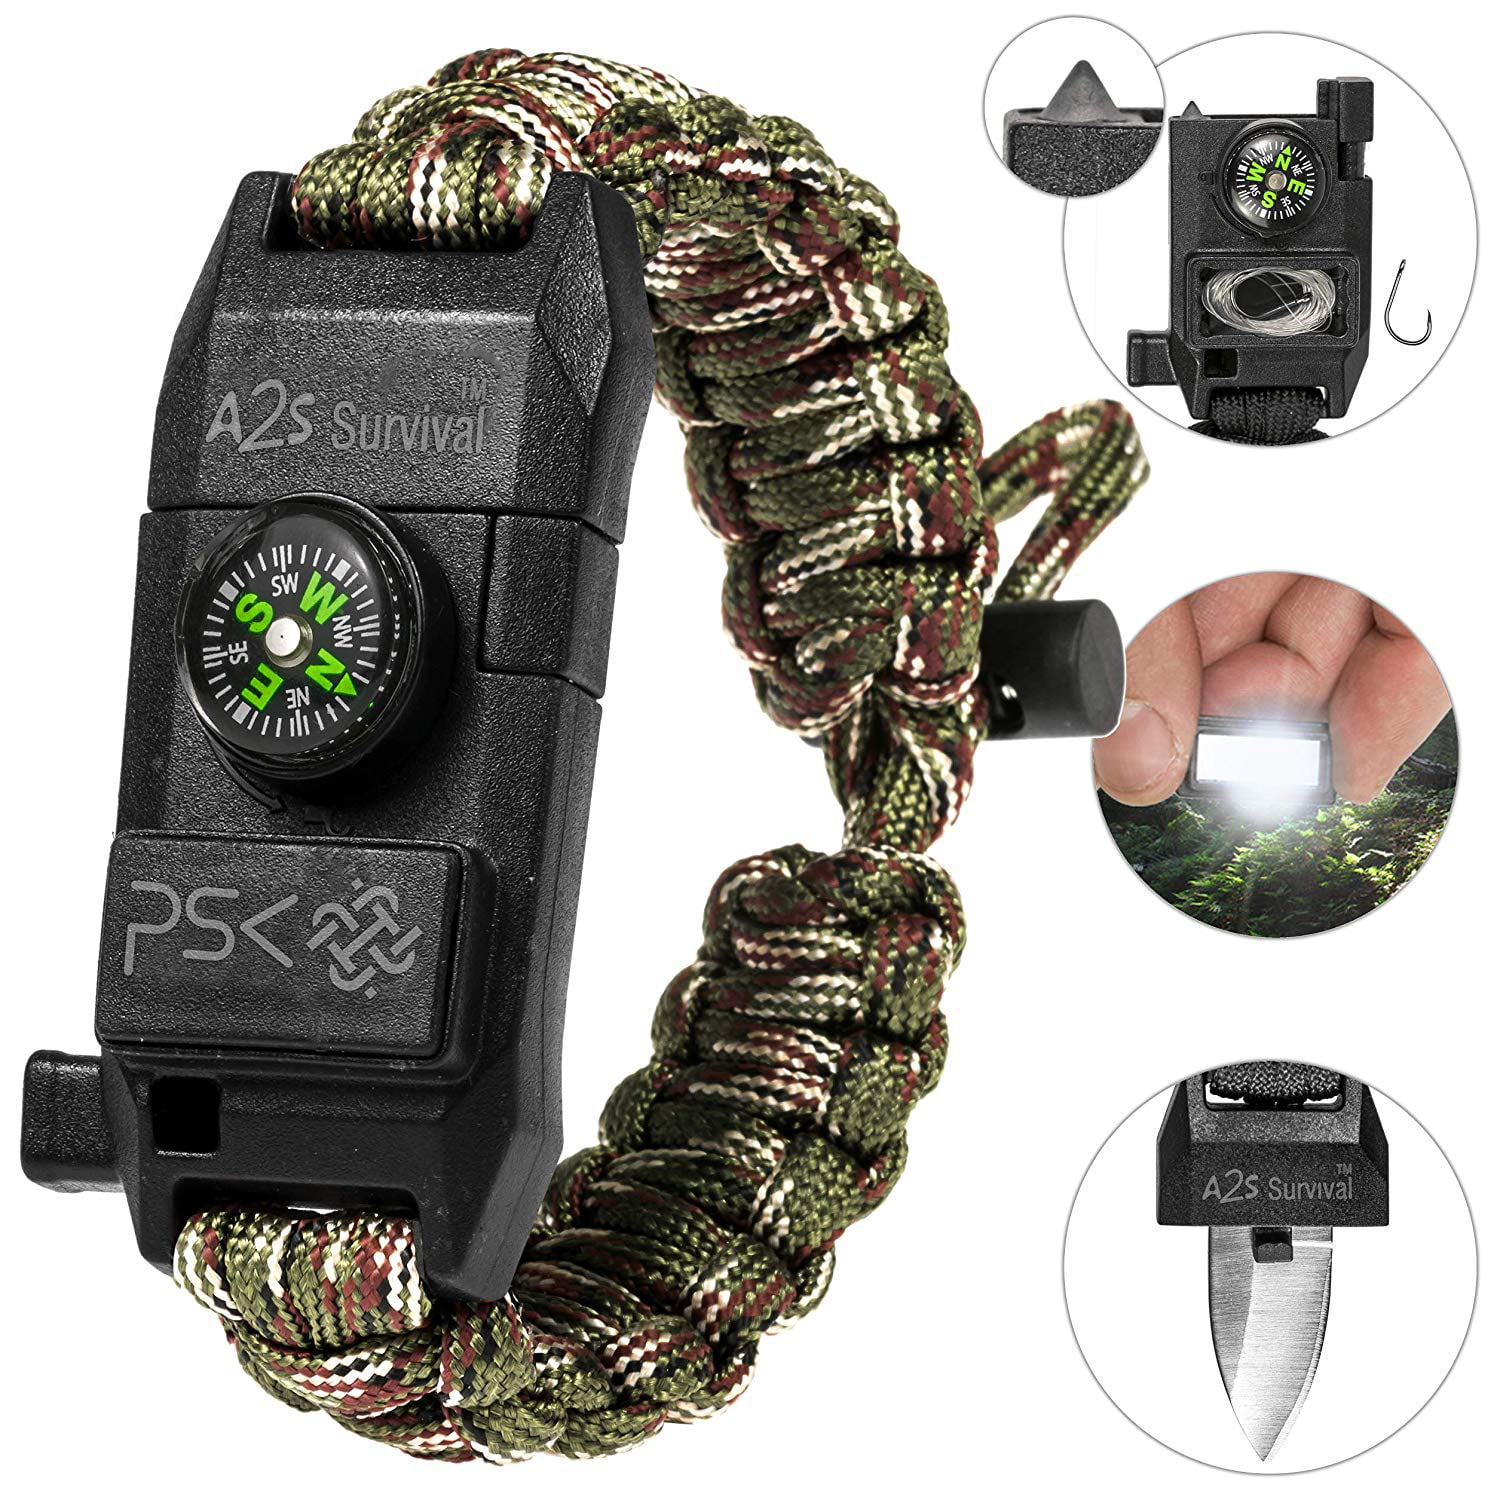 Para Cord Survival Bracelet Survival Gear Kit FREE Shipping 